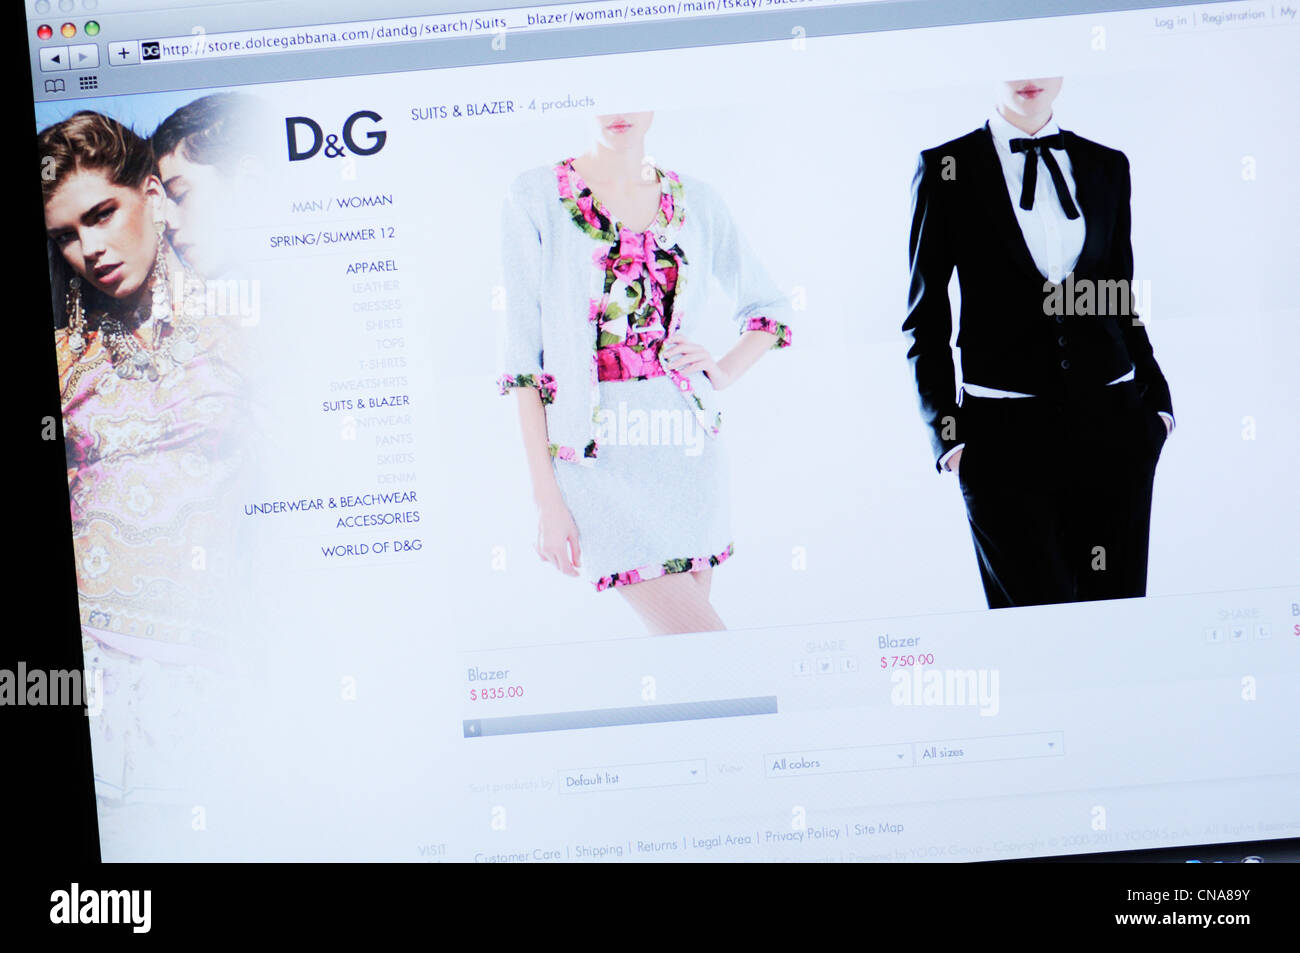 Dolce & Gabbana Apparel website Stock Photo - Alamy